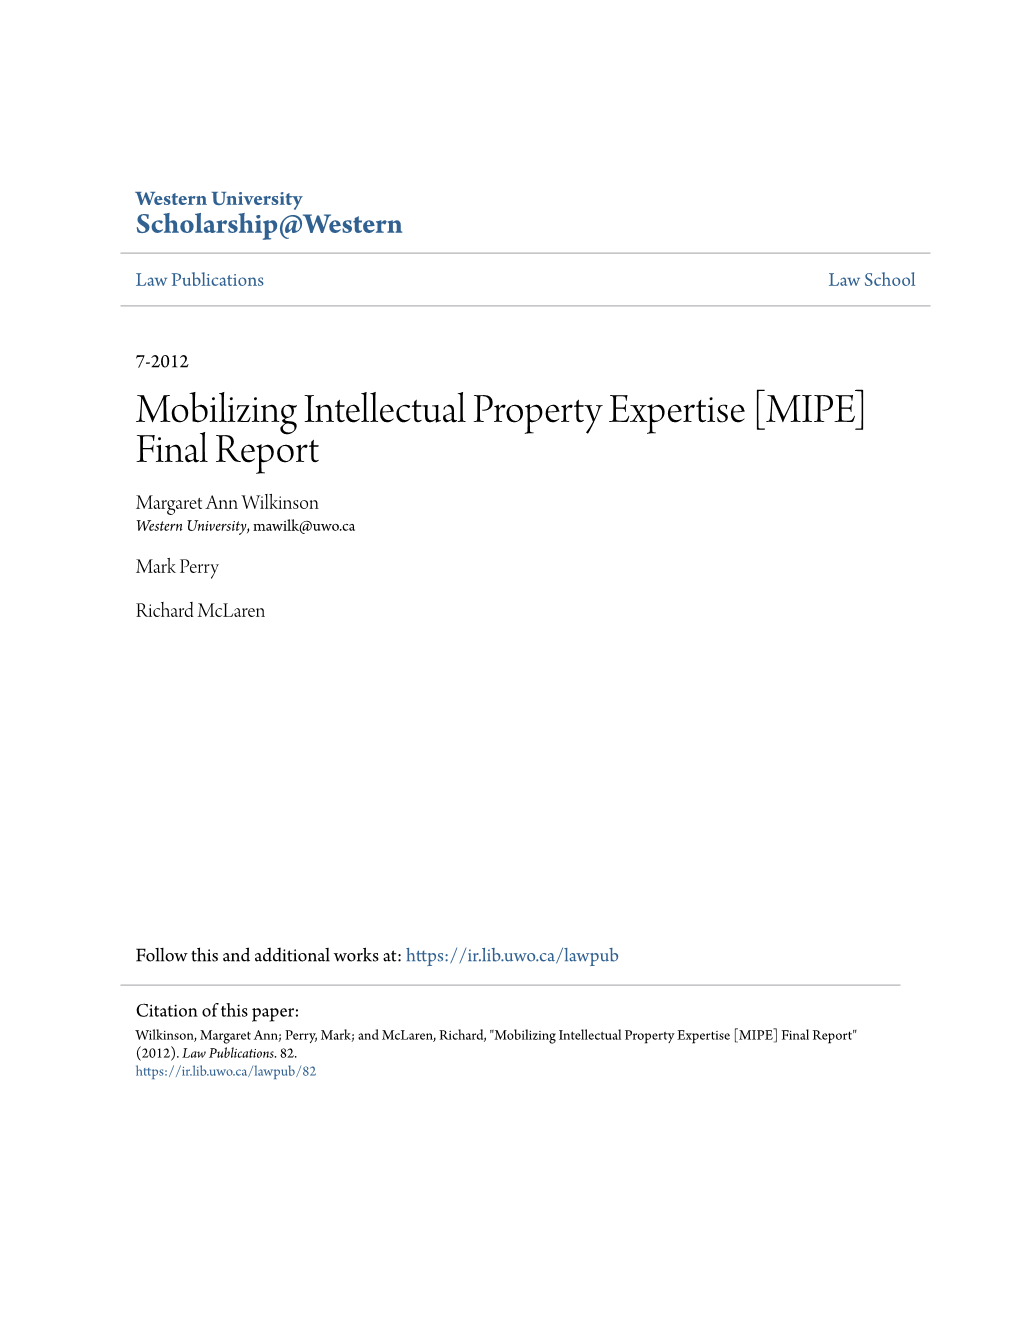 Mobilizing Intellectual Property Expertise [MIPE] Final Report Margaret Ann Wilkinson Western University, Mawilk@Uwo.Ca